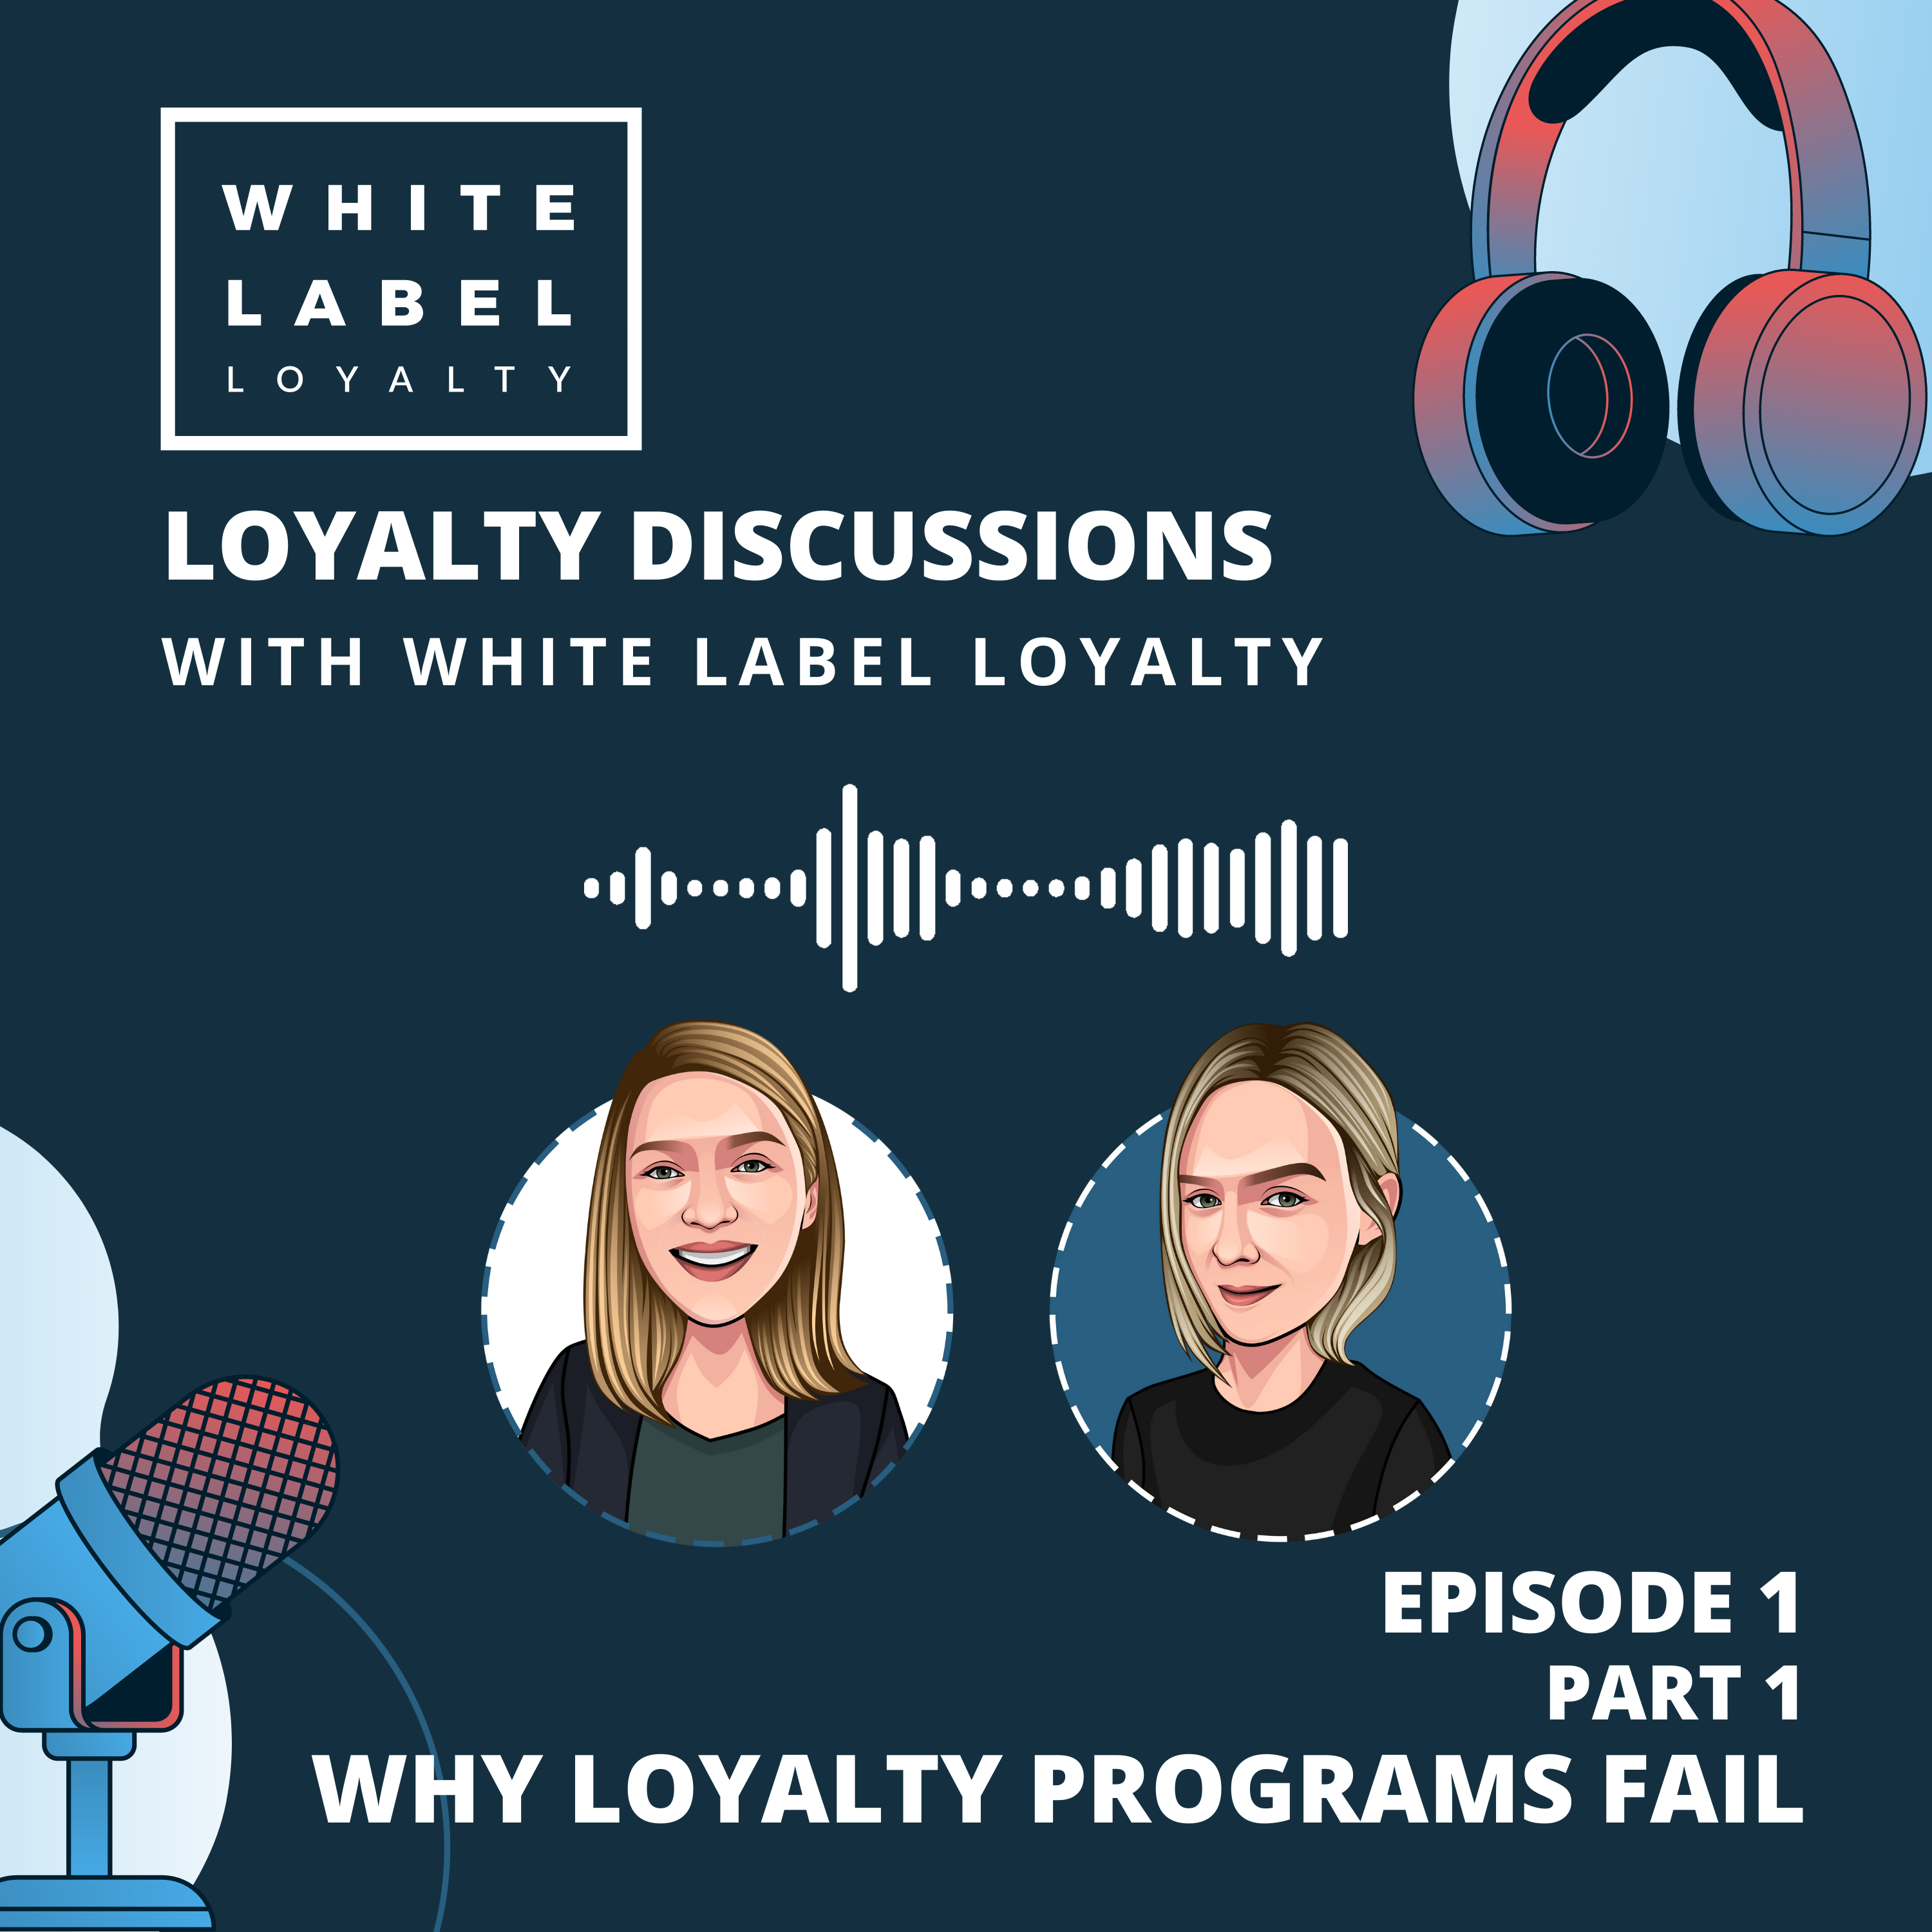 Why Loyalty Programs Fail: Part 1